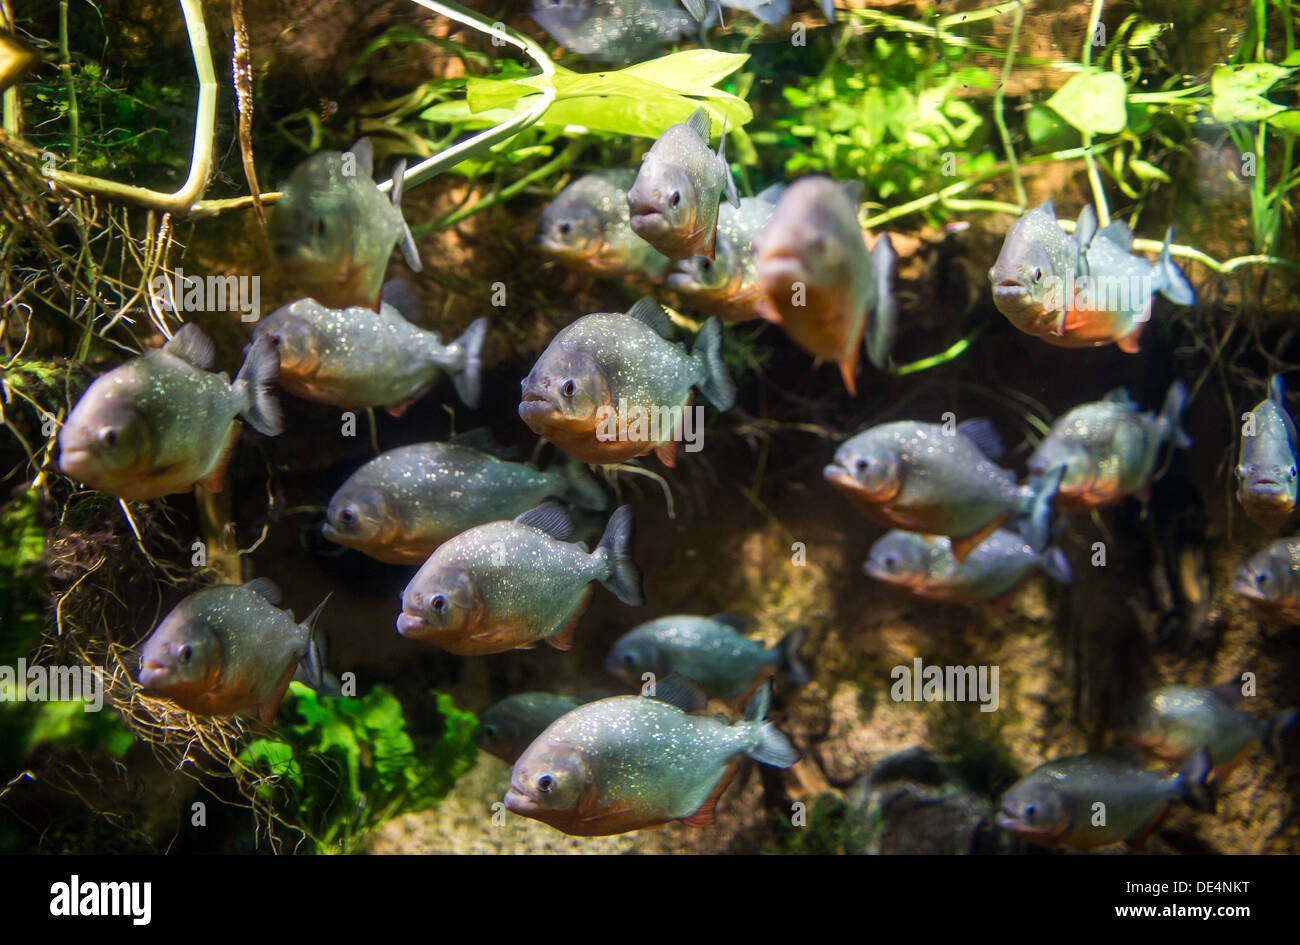 Piranha (Colossoma macropomum) in an aquarium on a green background Stock Photo